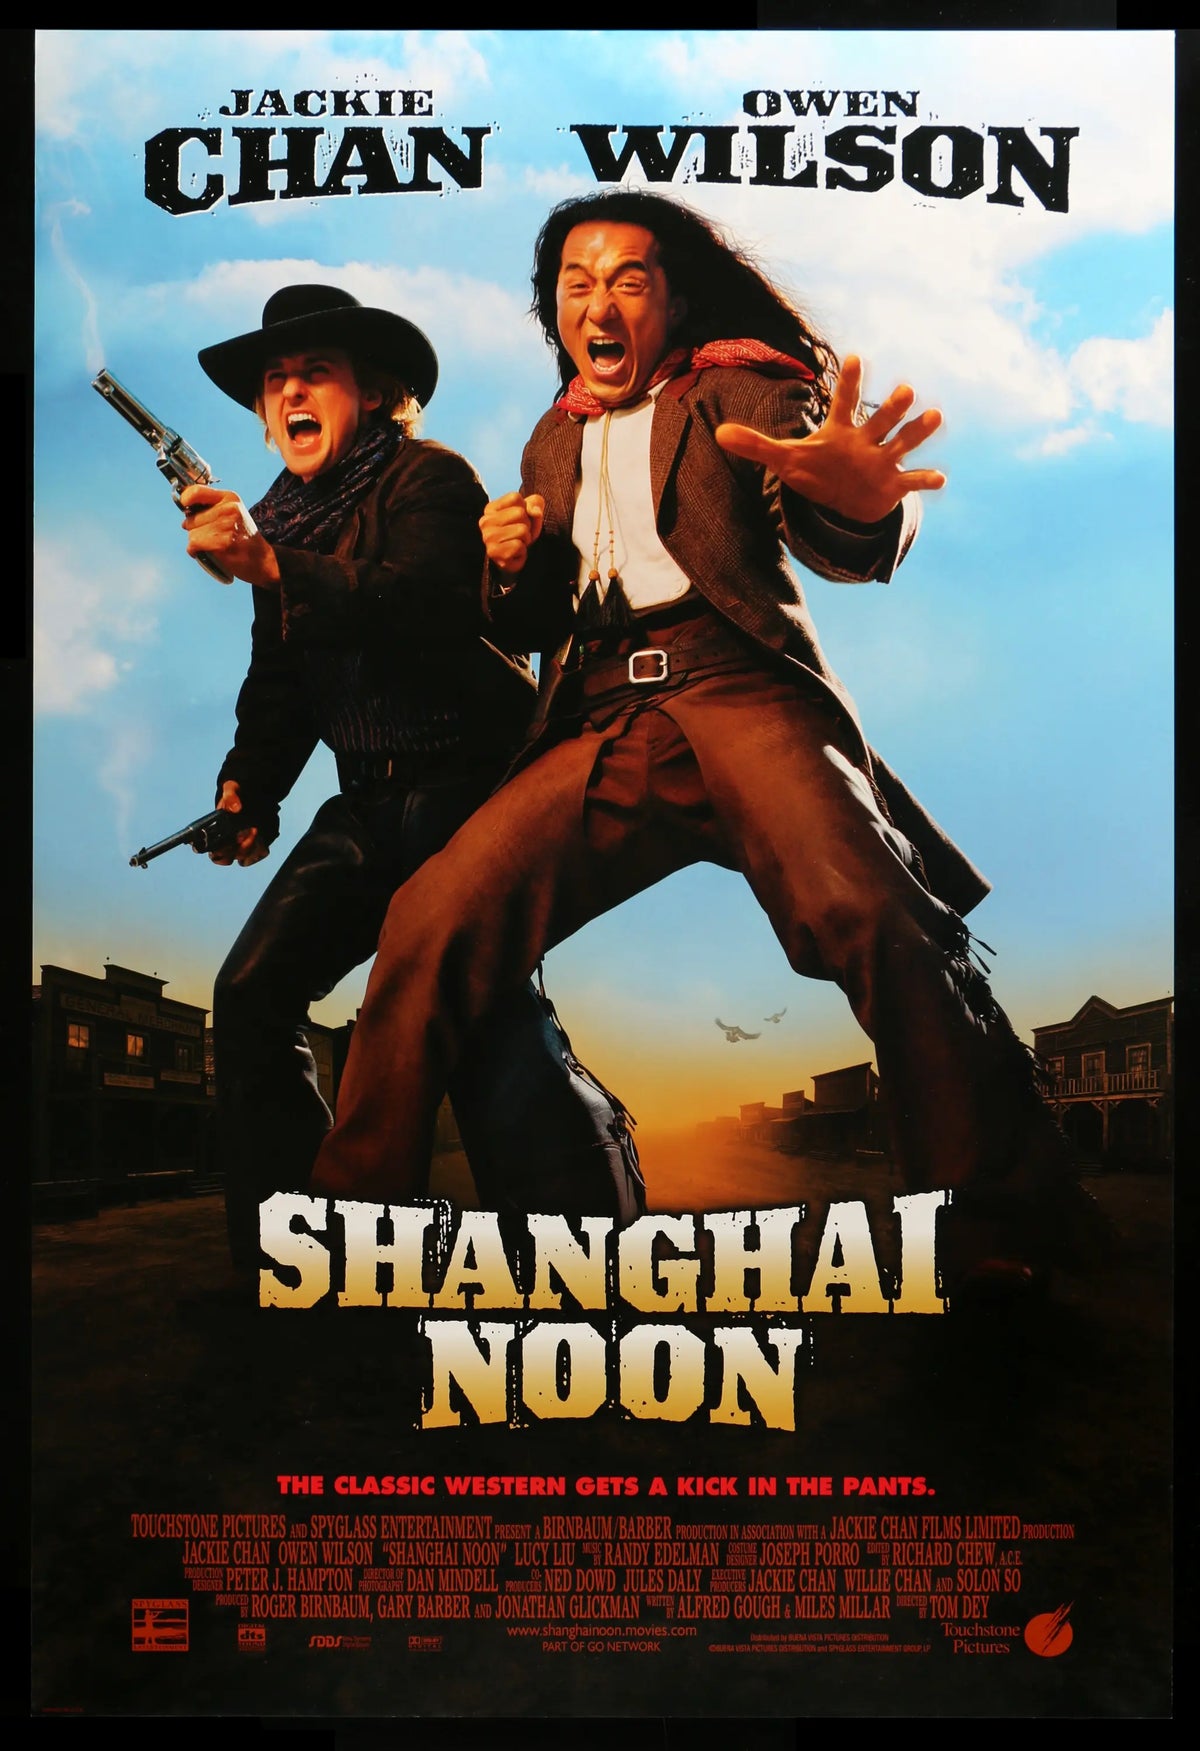 Shanghai Noon (2000) original movie poster for sale at Original Film Art